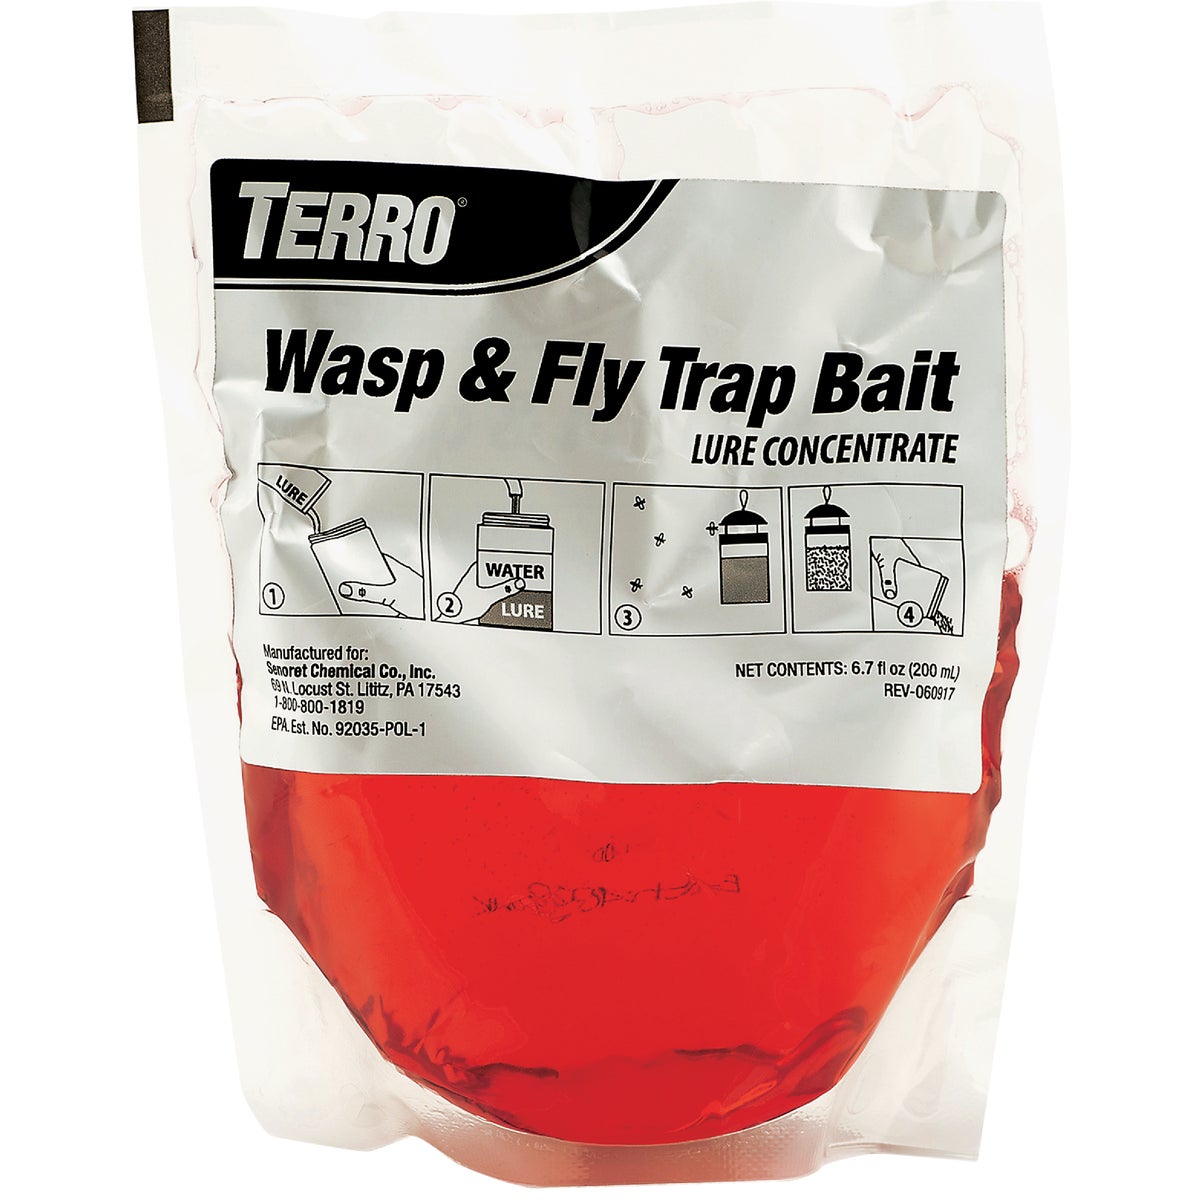 Woodstream 272612 Terro Indoor Fly Trap Plus Lure - Pack of 4, 1 - Ralphs